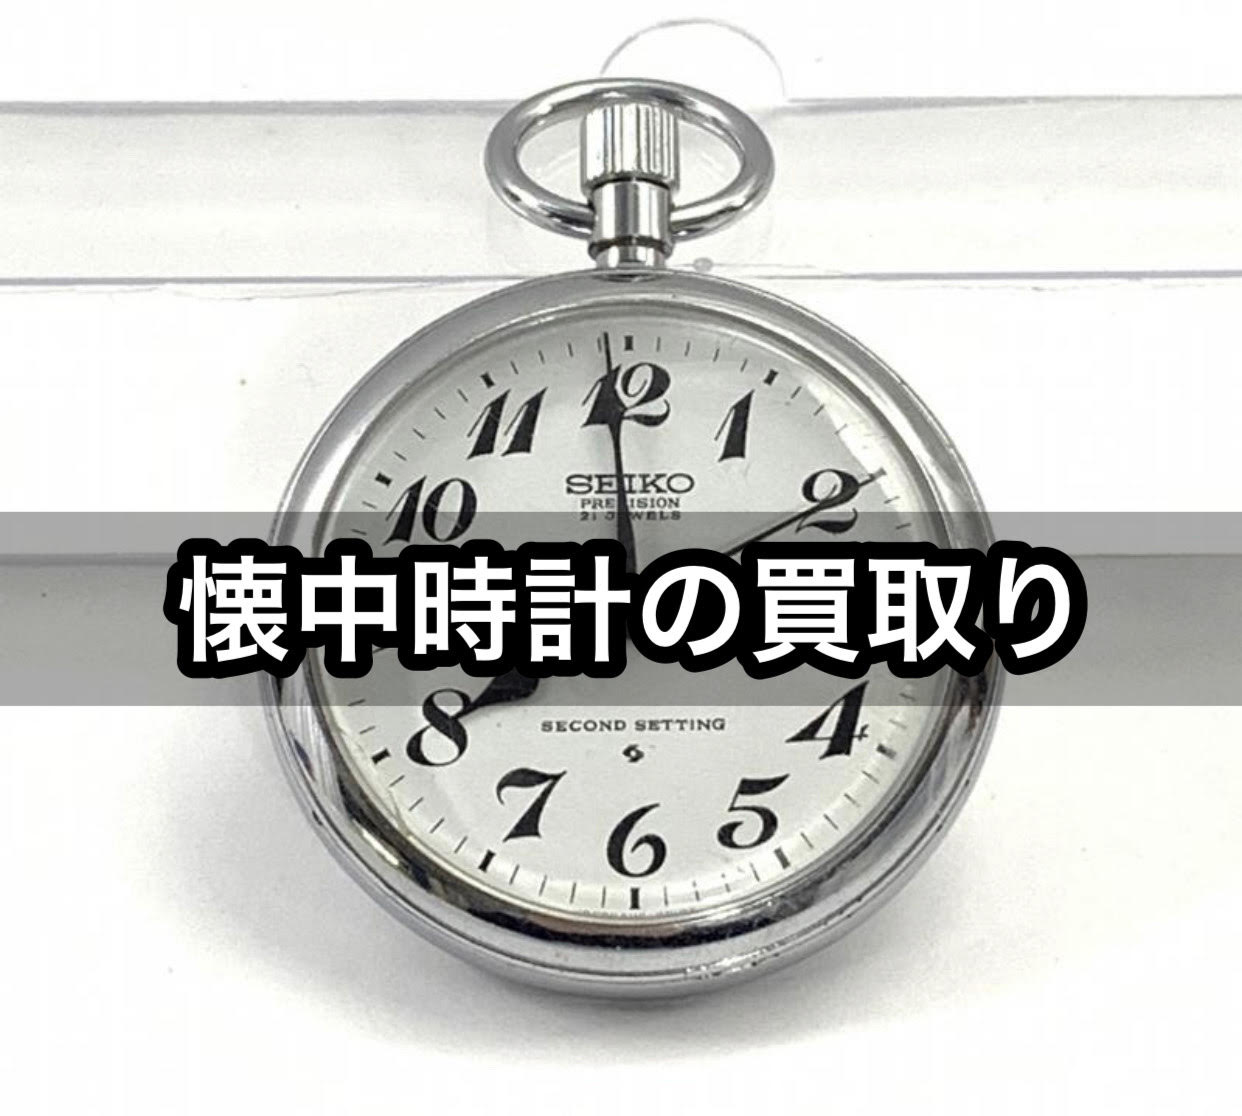 SEIKO製・懐中時計の買取り | 鉄道書店 買取サイト「出張買取」「宅配